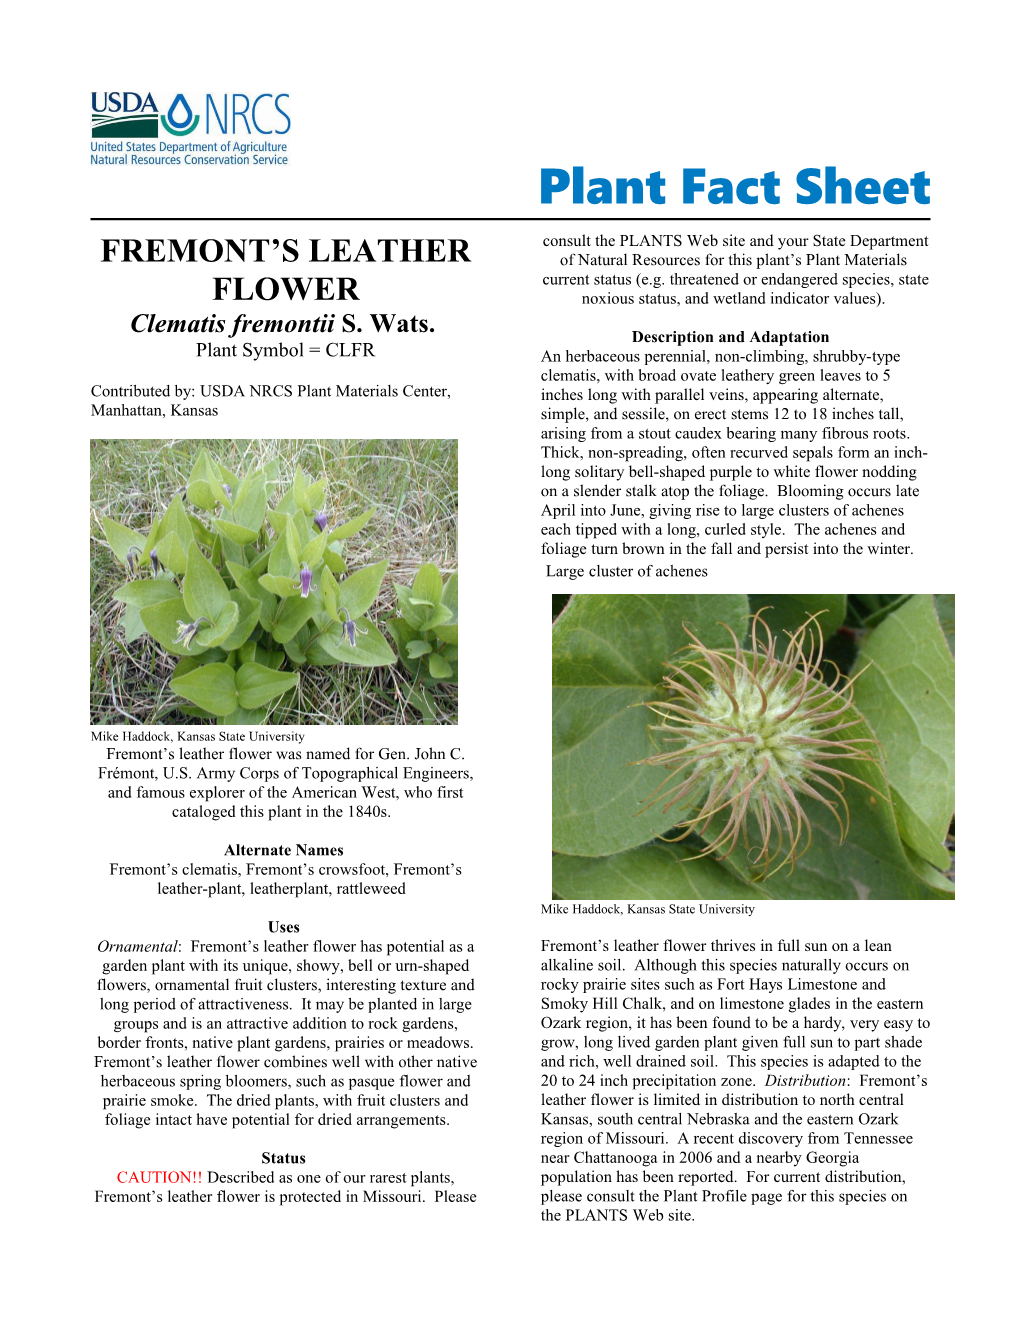 Fremont's Leather Flower Plant Fact Sheet